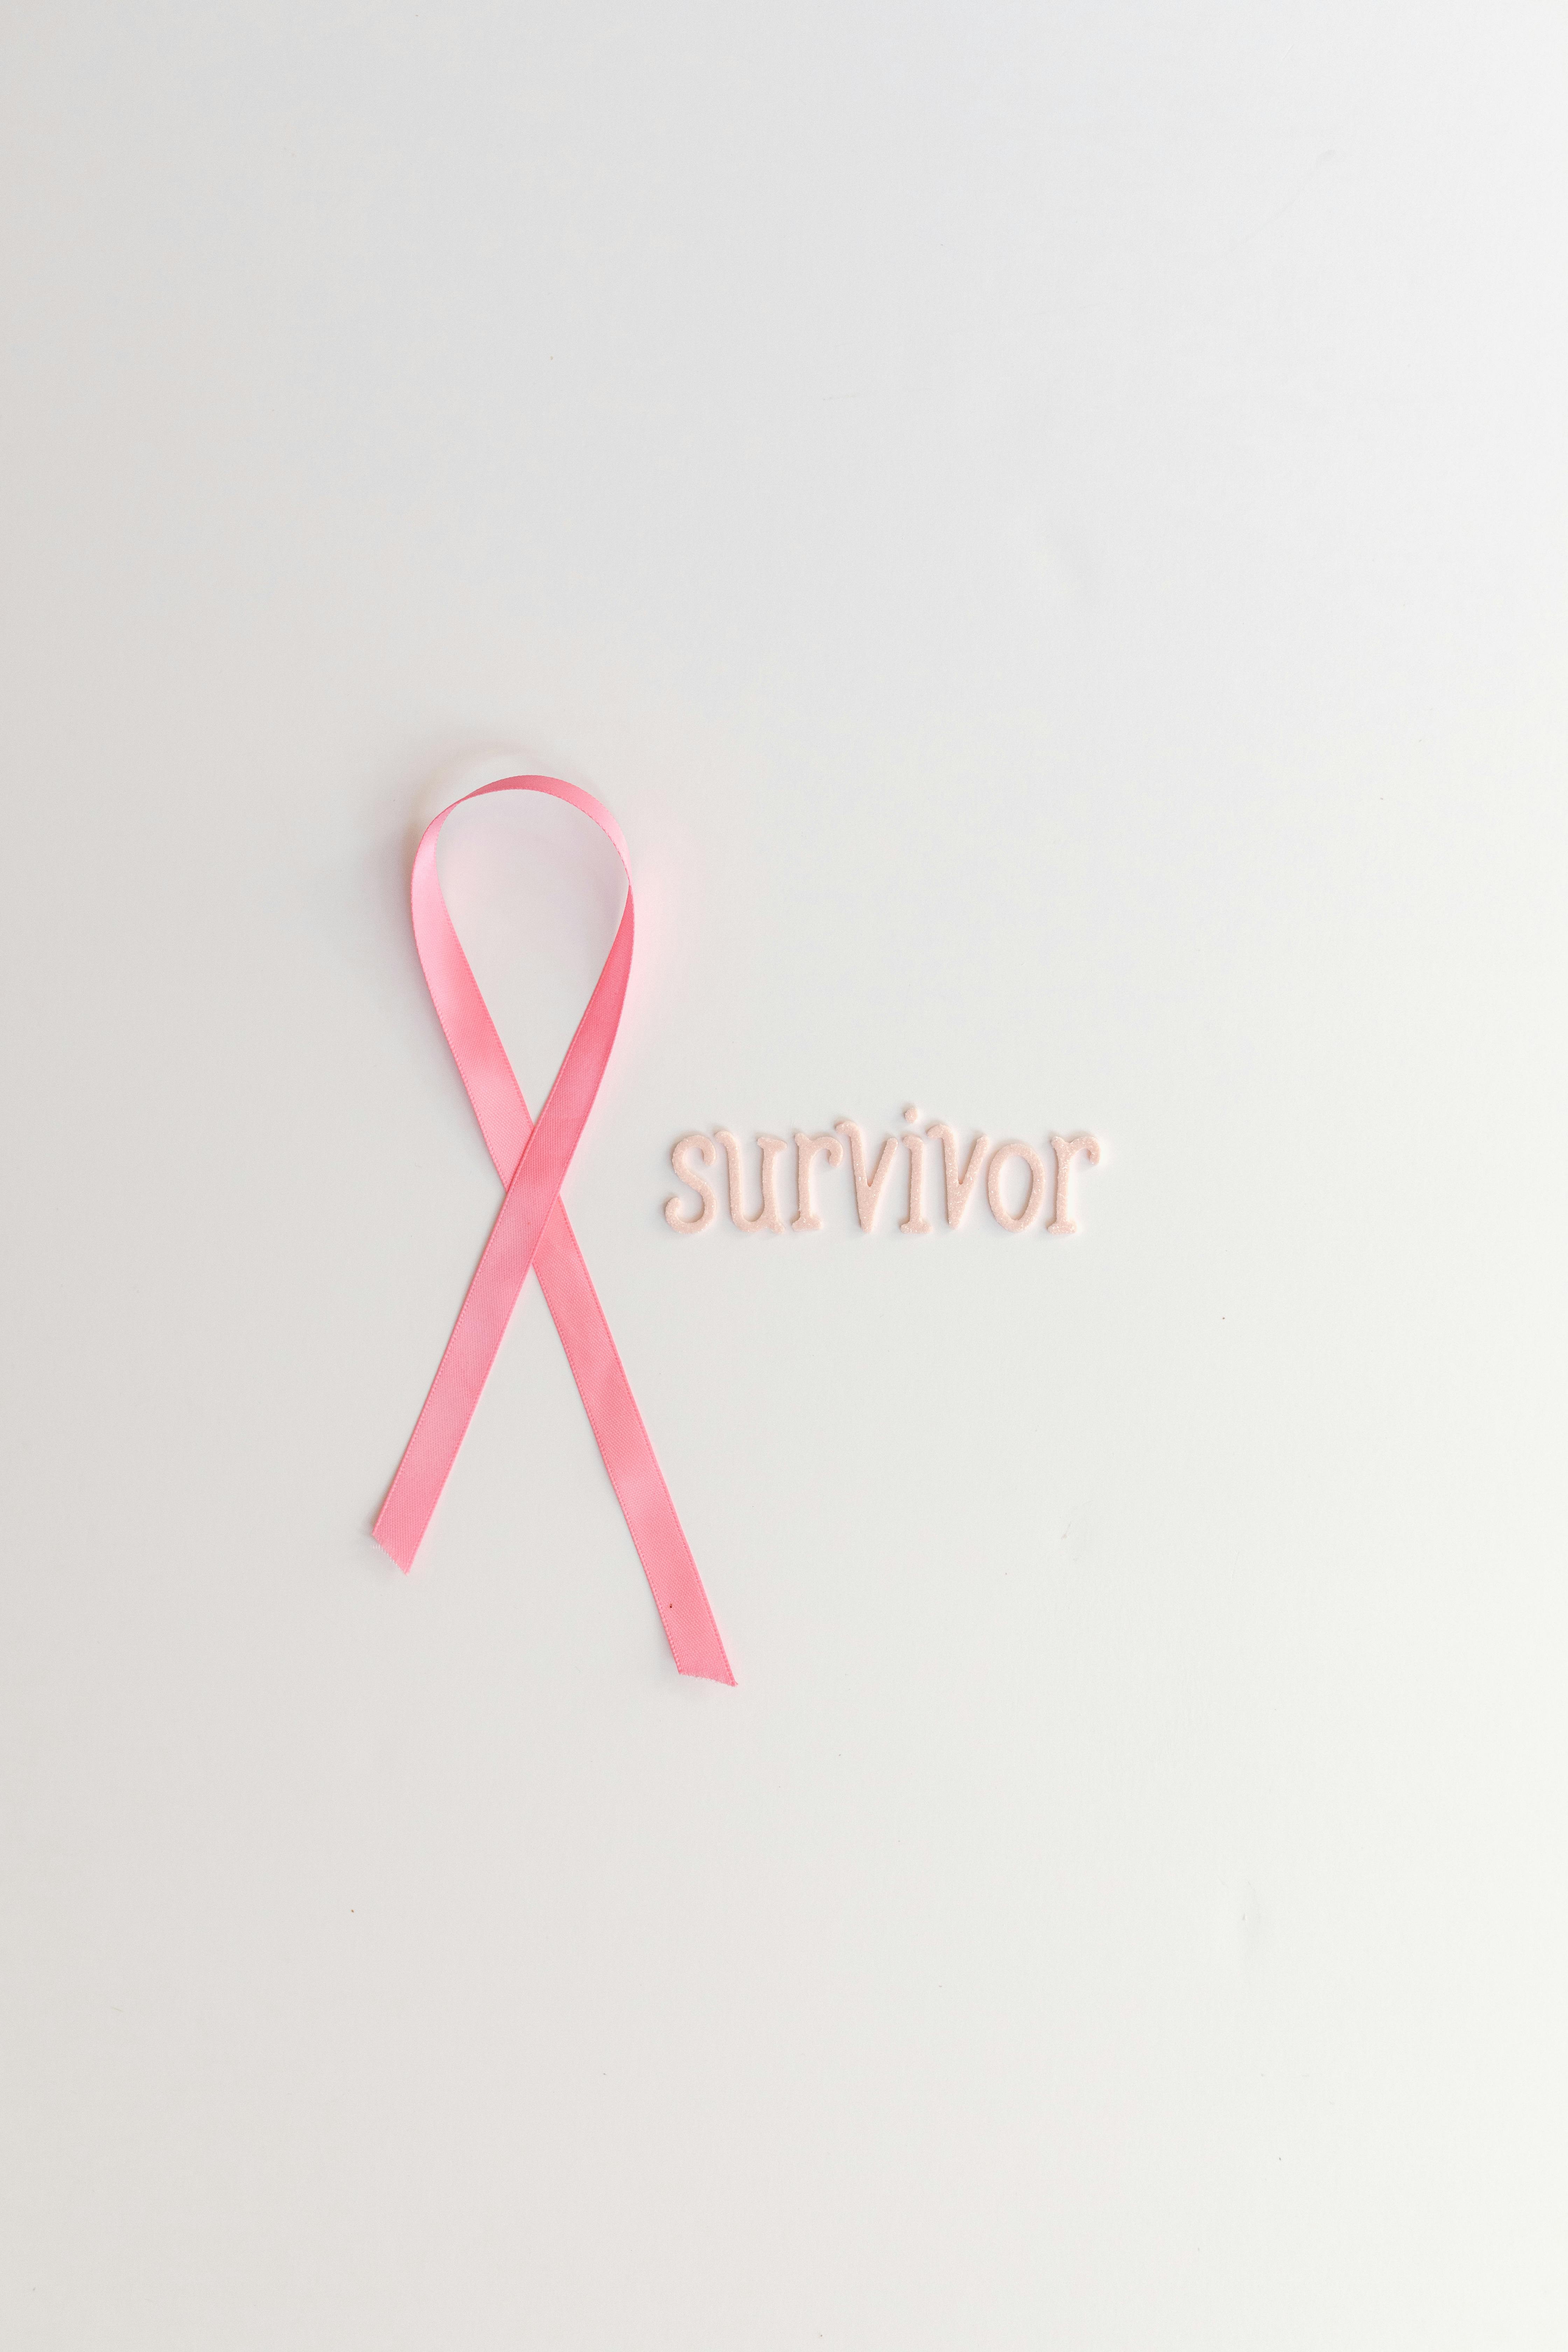 Breast Cancer Awareness Background Images  Free Download on Freepik